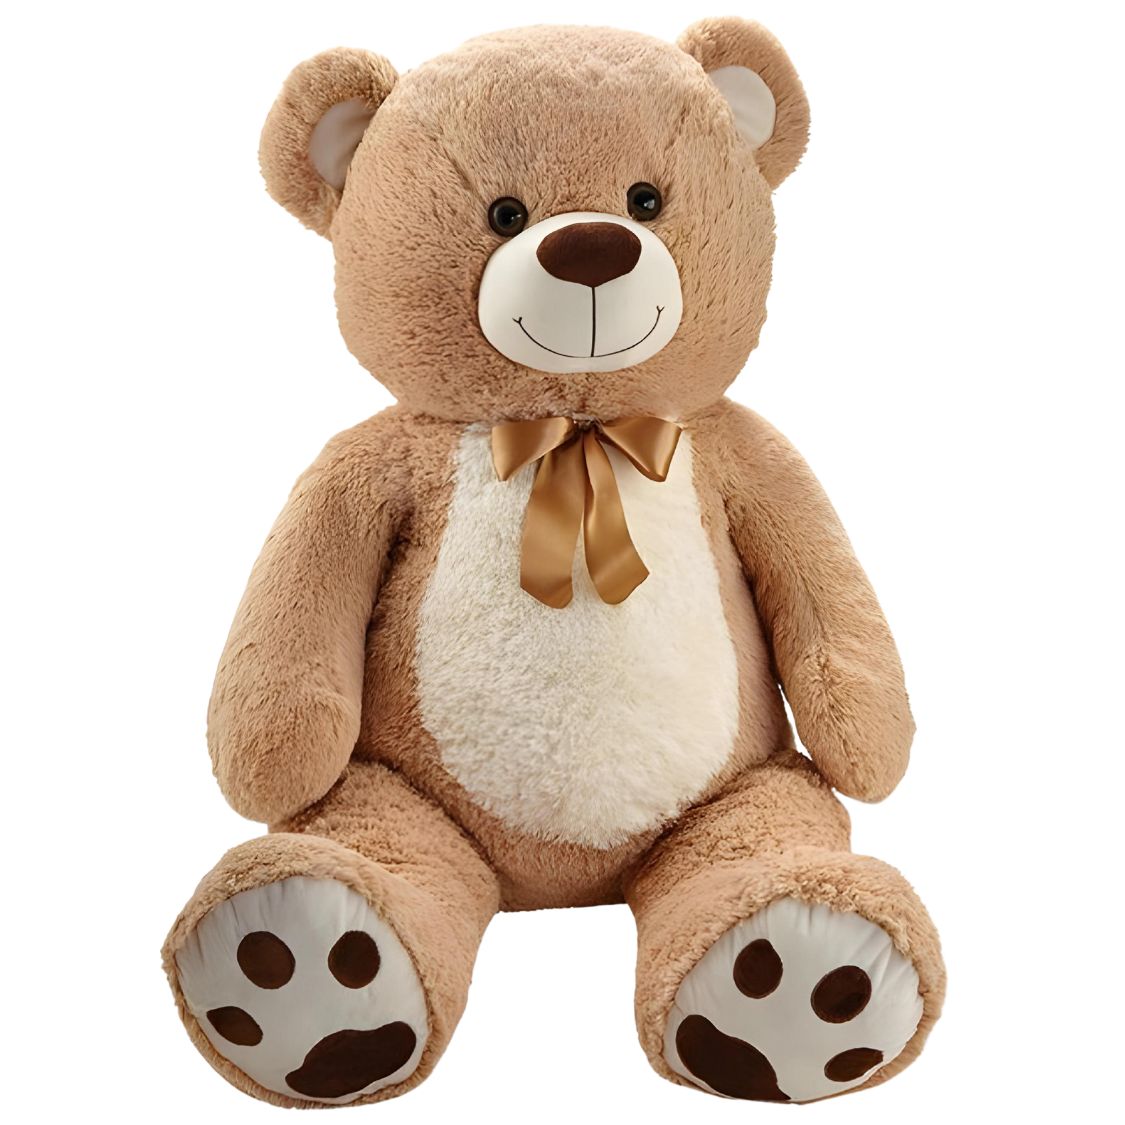 Teddy Bear Plush Stuffed Animal